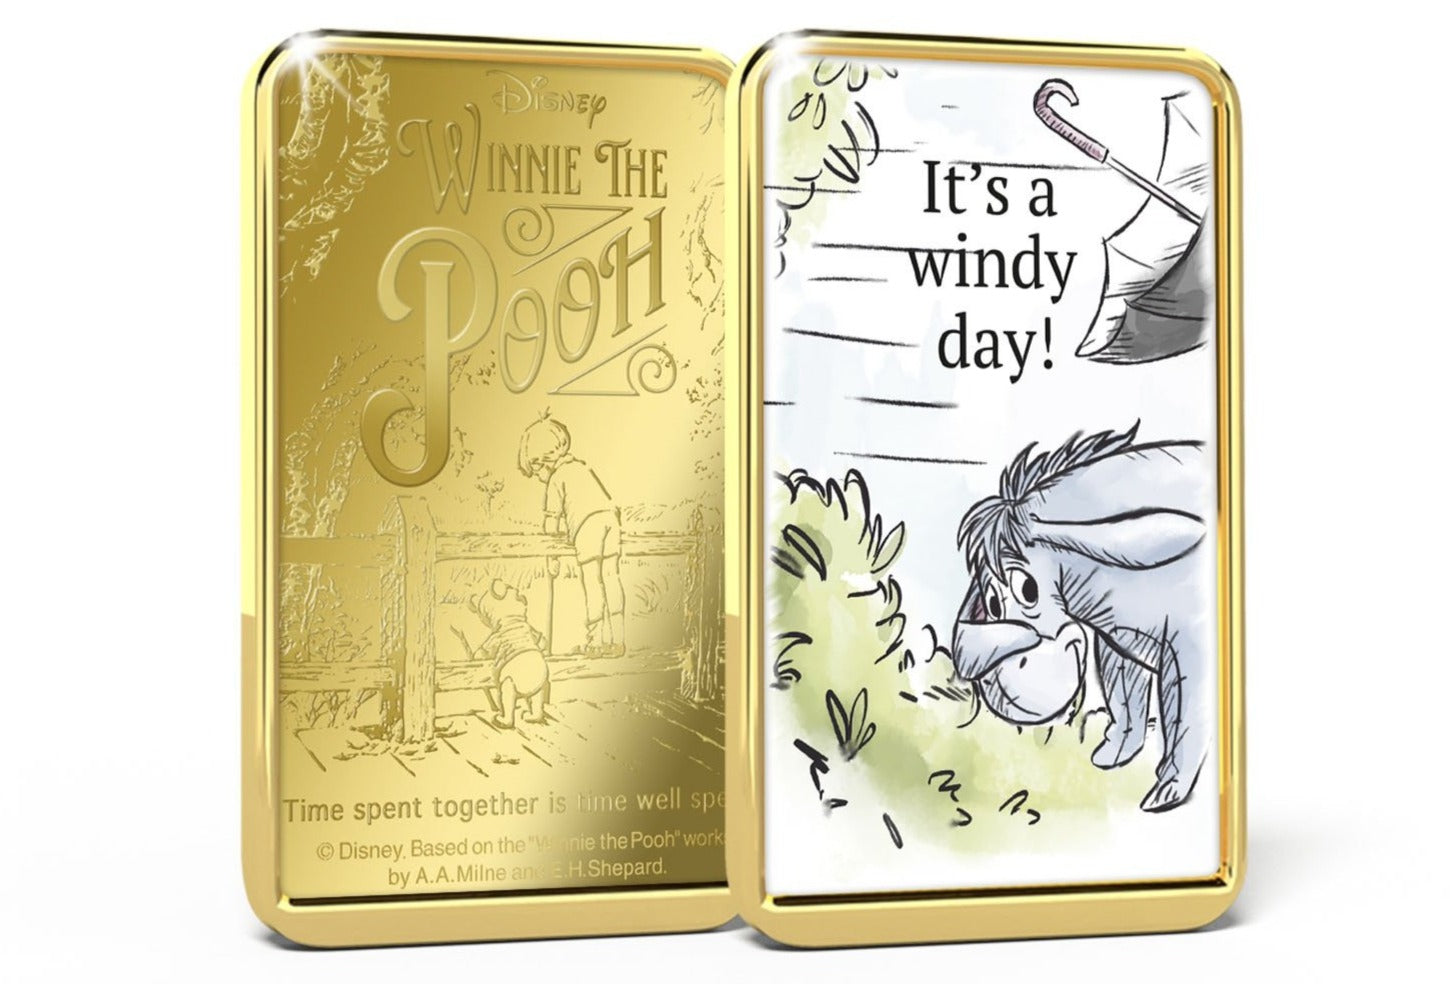 Disney Winnie the Pooh, Lingotes bañados en Oro 24 Quilates - It's A Windy Day